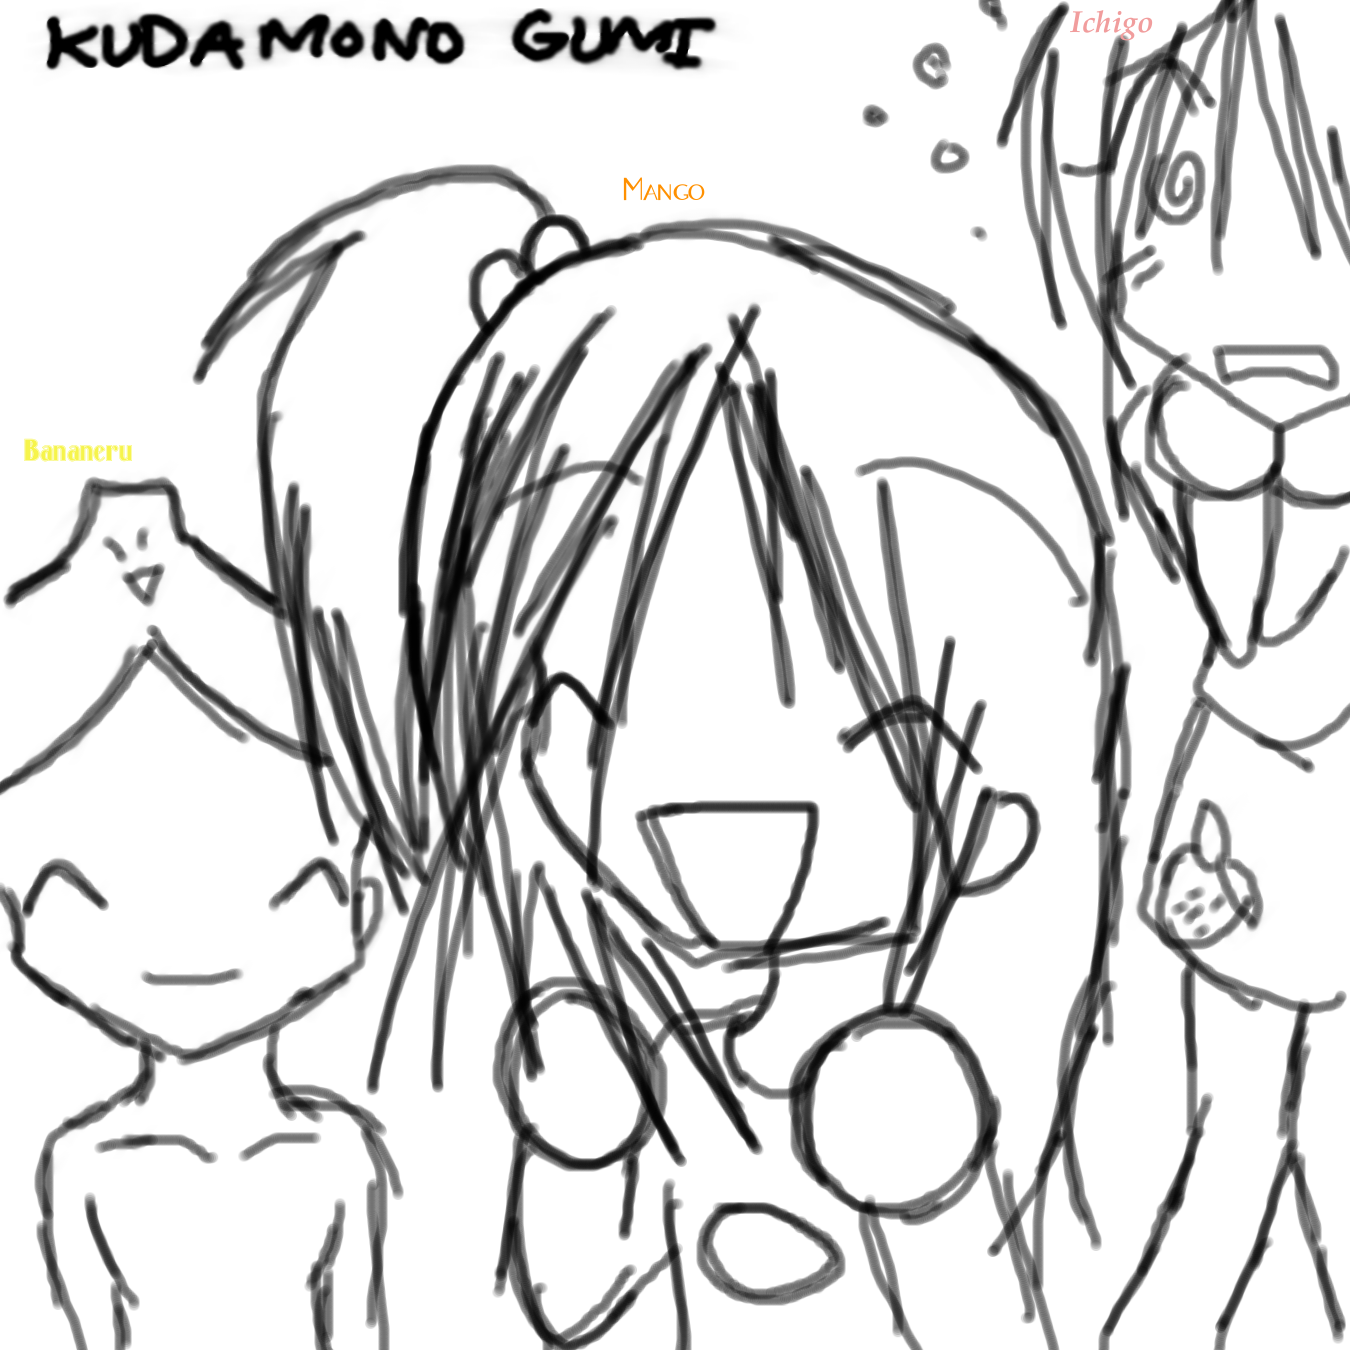 Kudamono Gumi by kamoku_hito